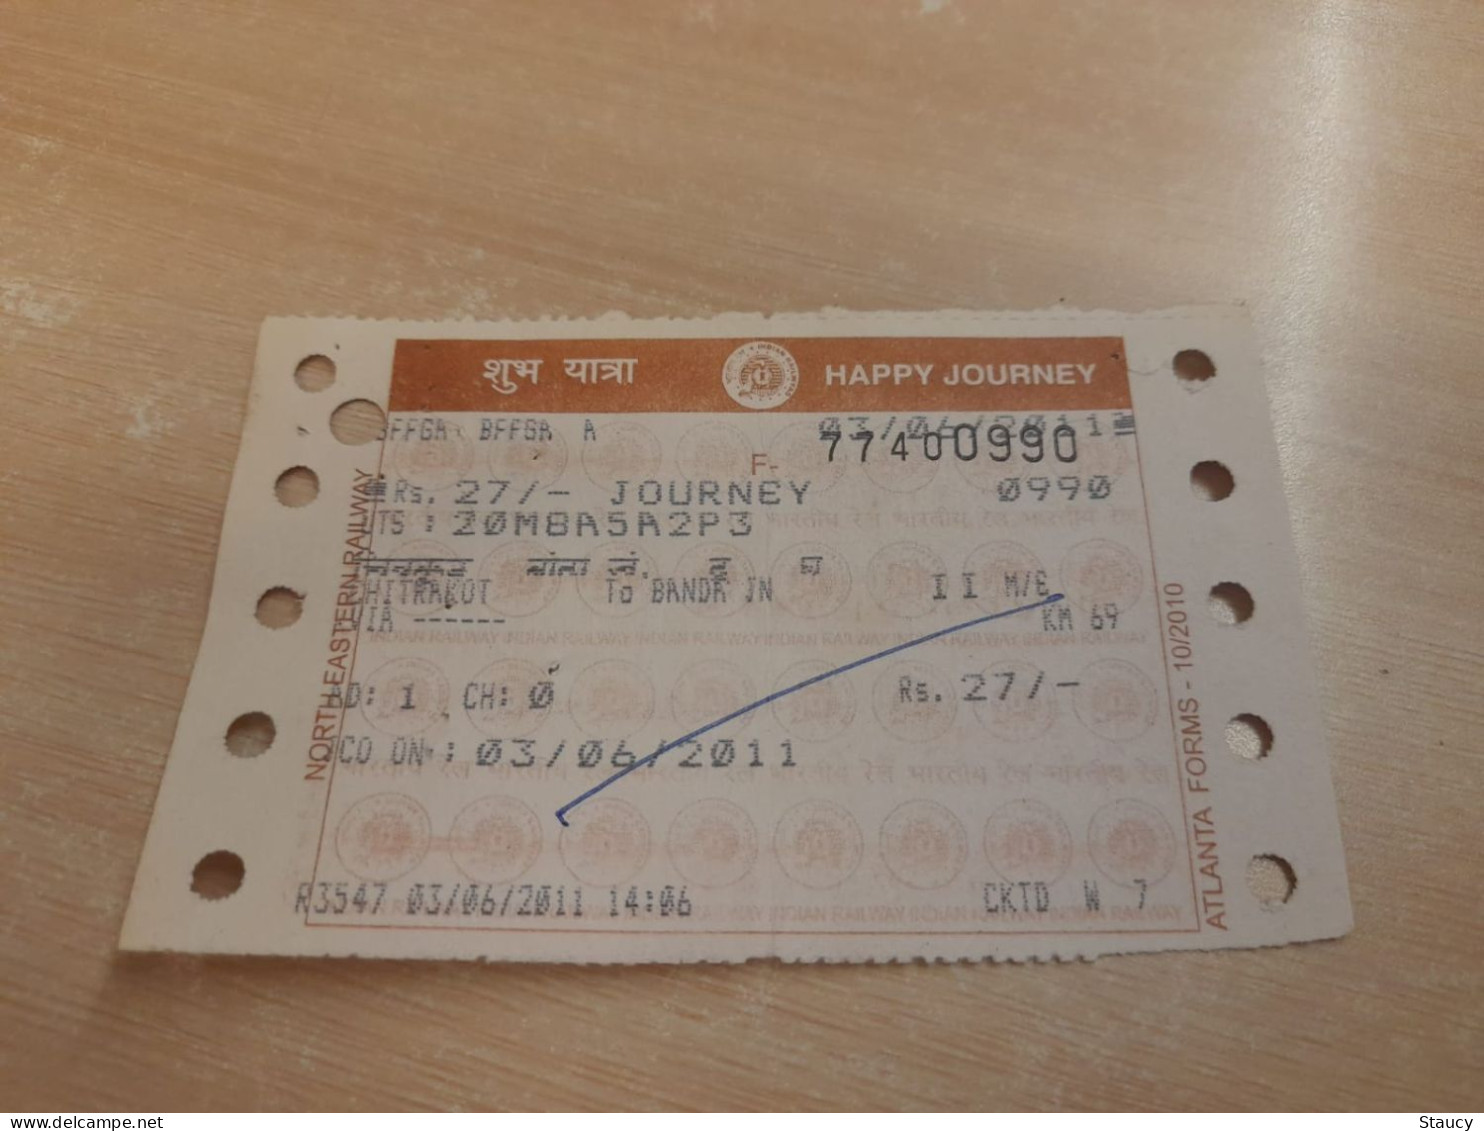 India Old / Vintage - INDIAN Railways / Train Ticket "NORT EASTERN RAILWAY" As Per Scan - World